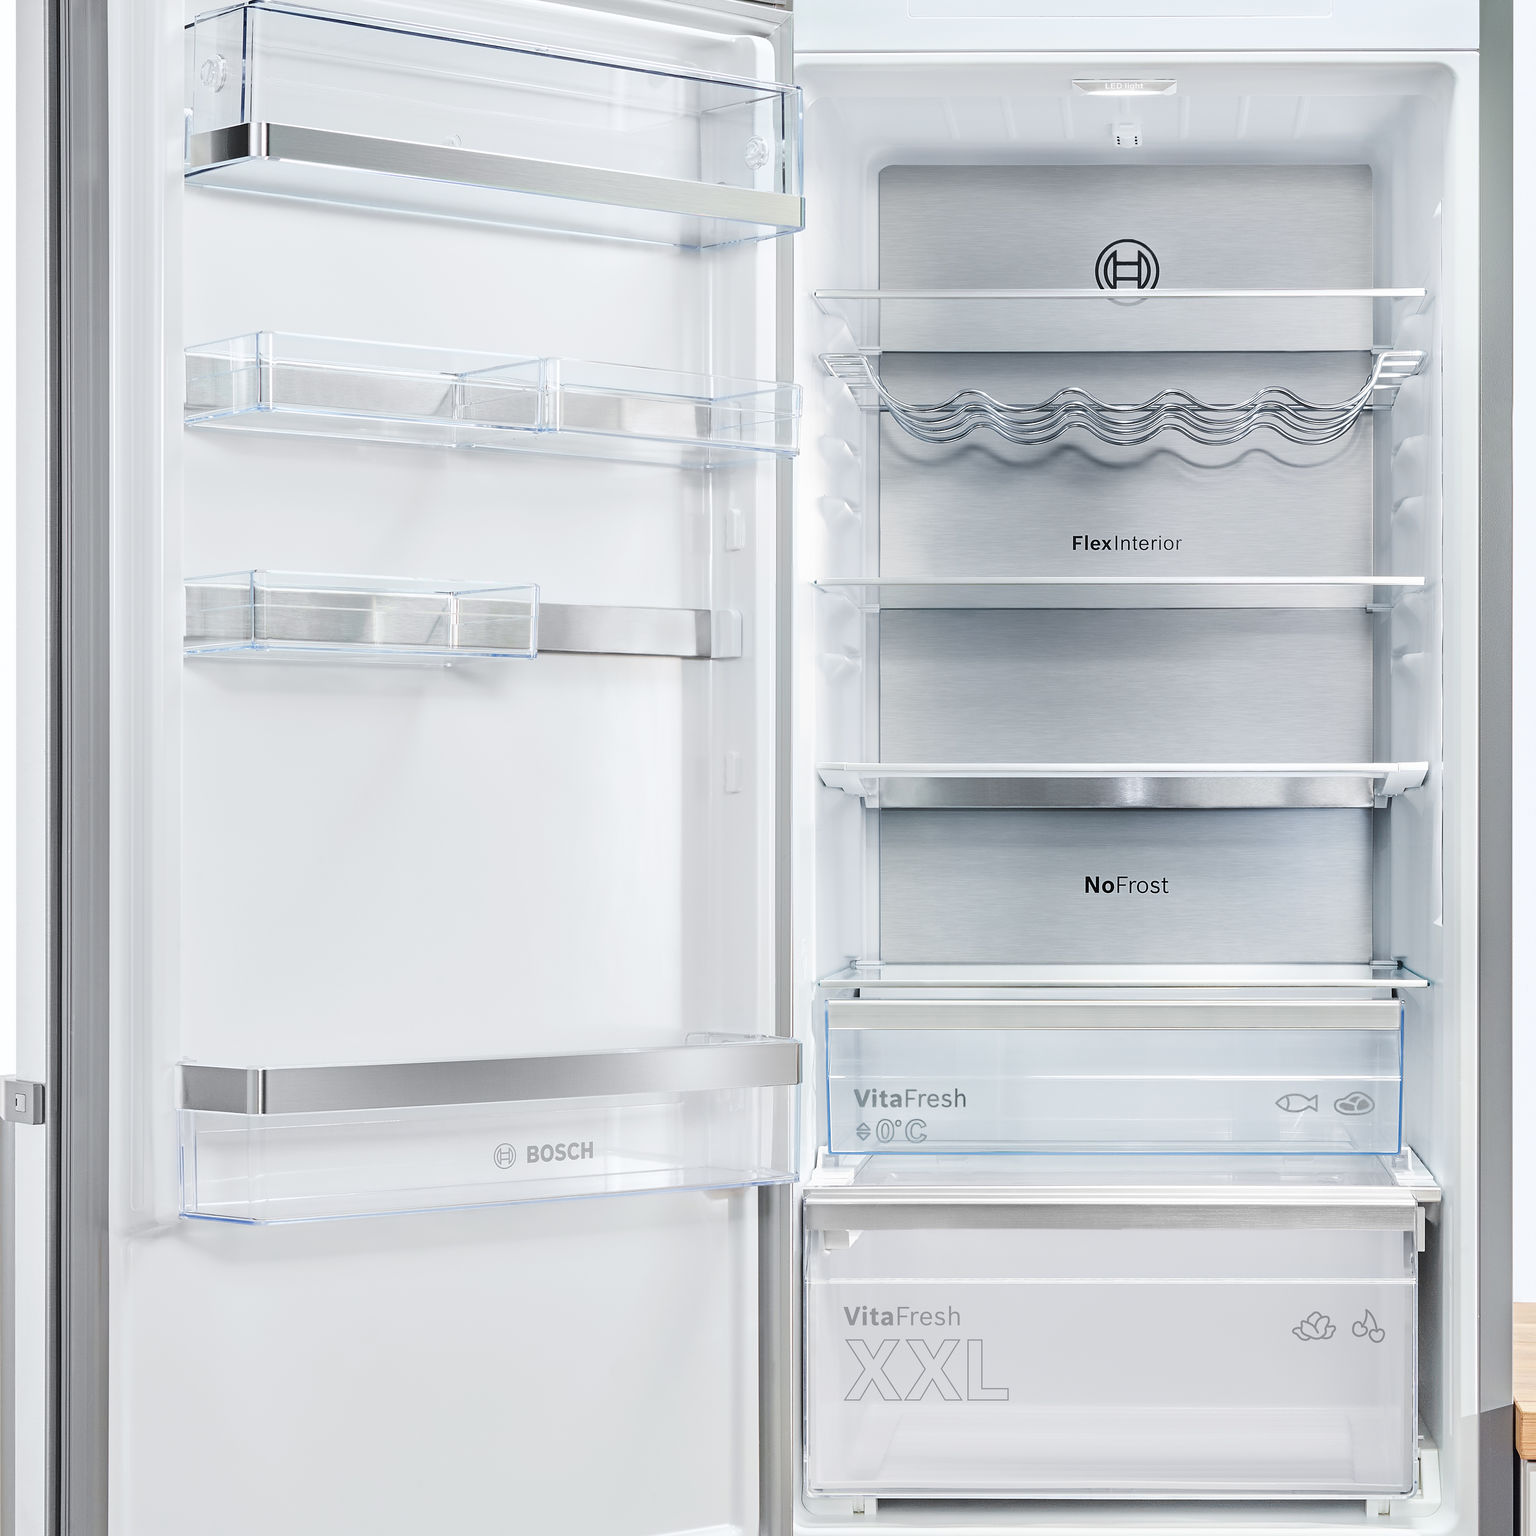 are bosch refrigerators reliable